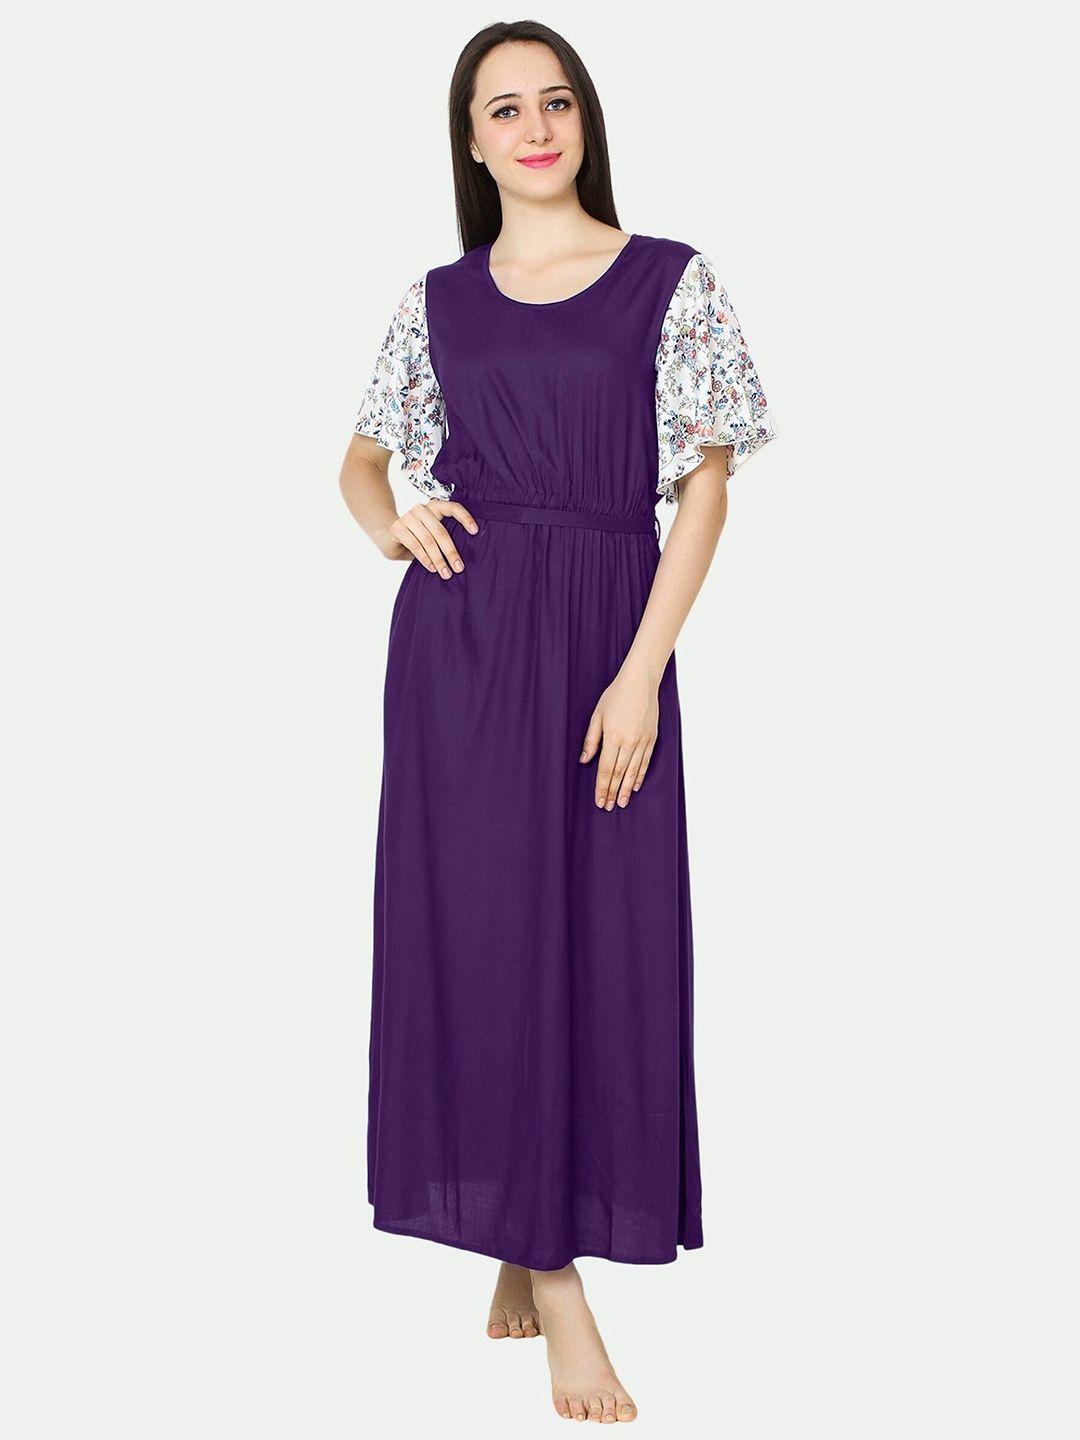 patrorna-women-purple-printed-maxi-nightdress